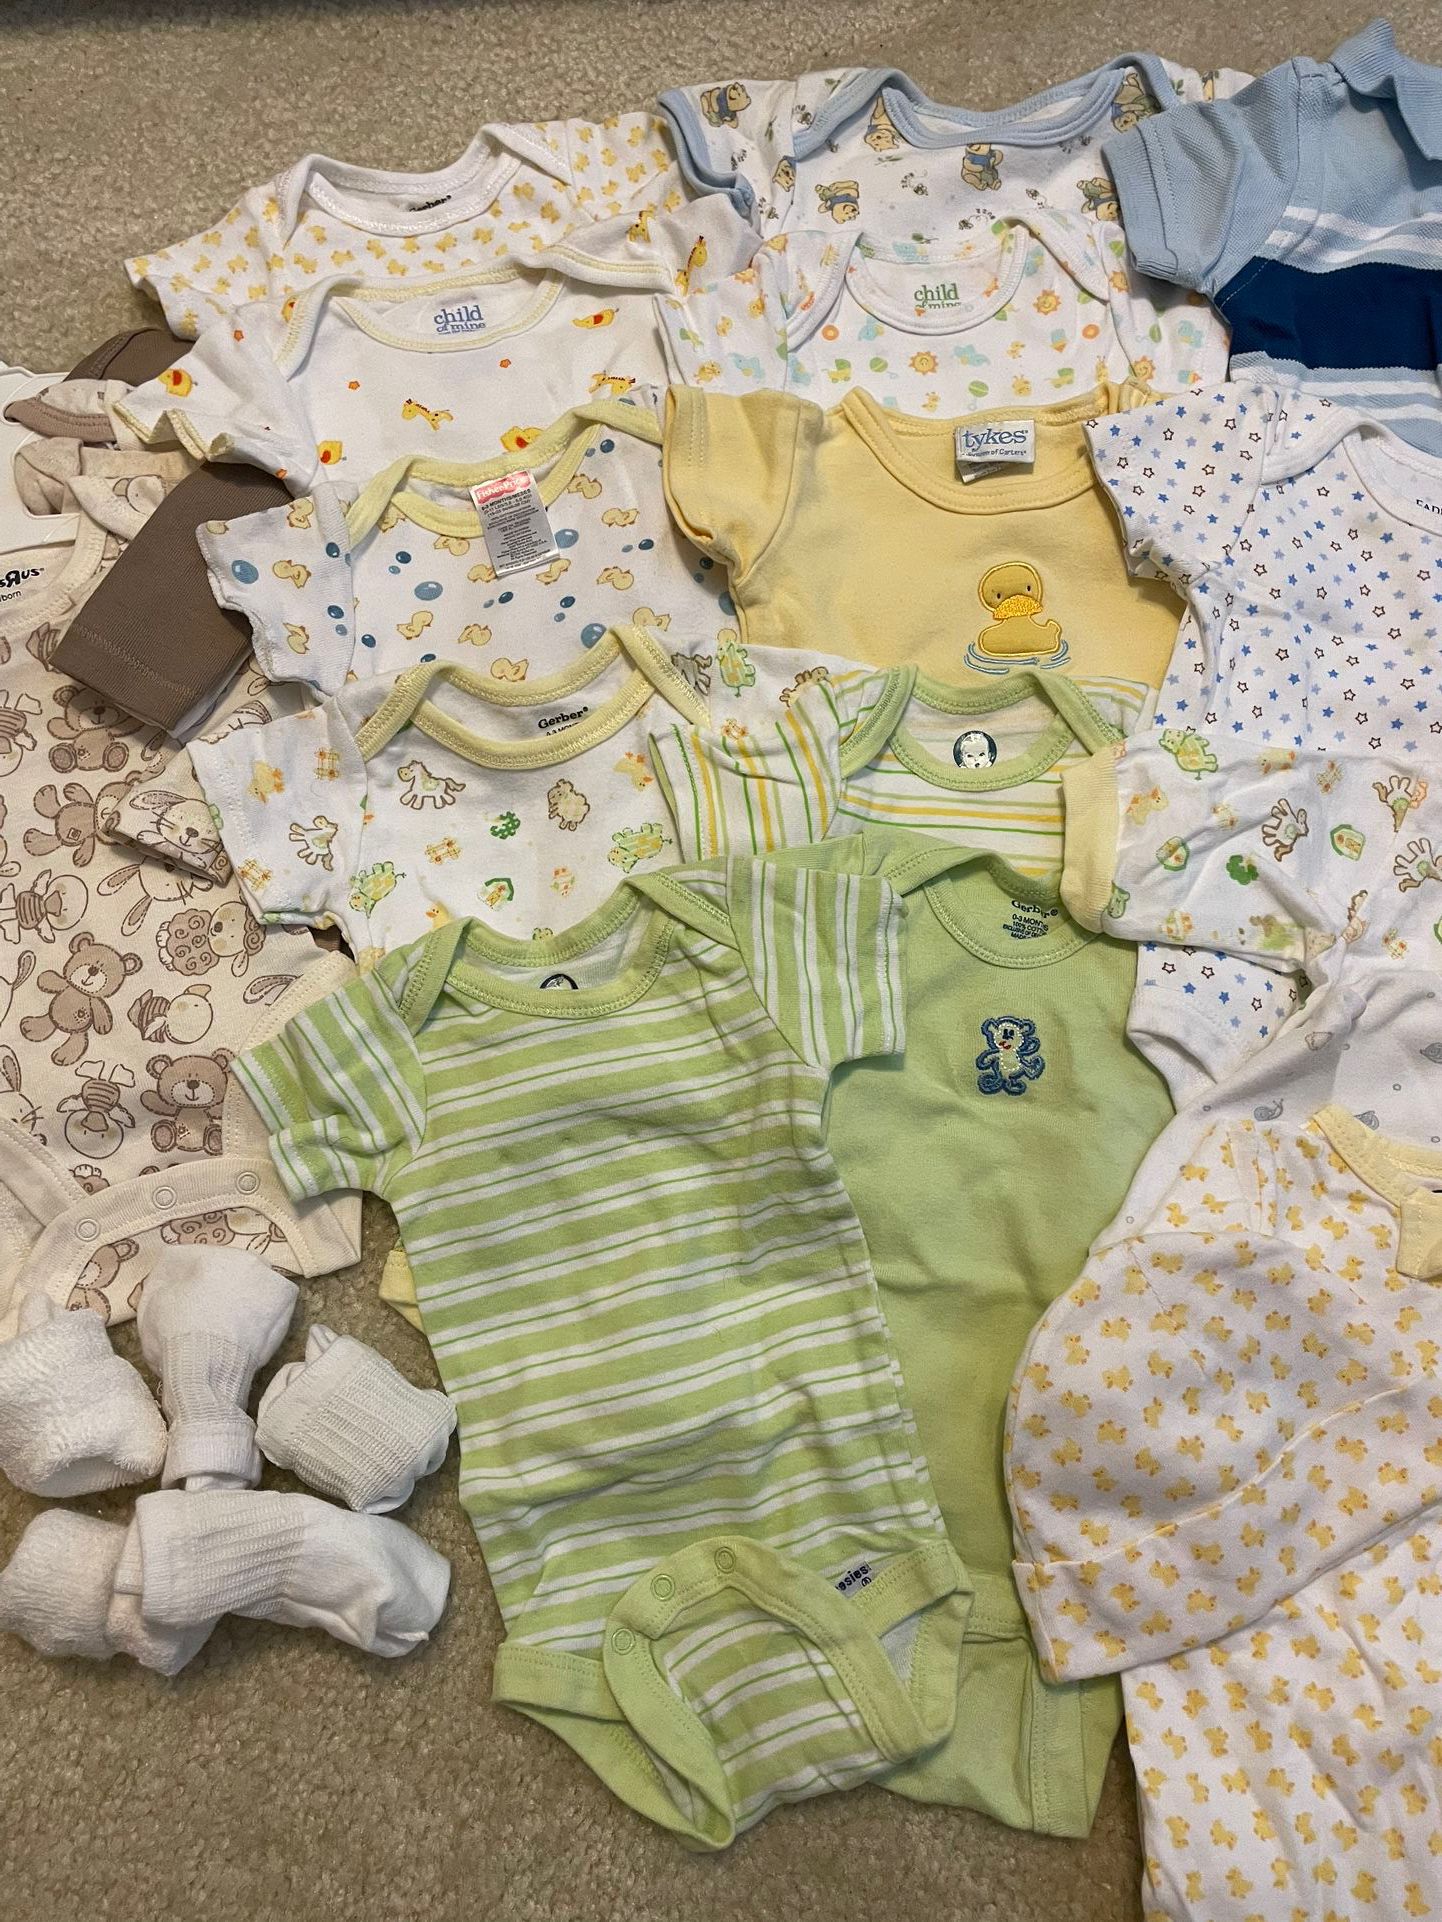 Baby Clothes Bundle- 40 Items